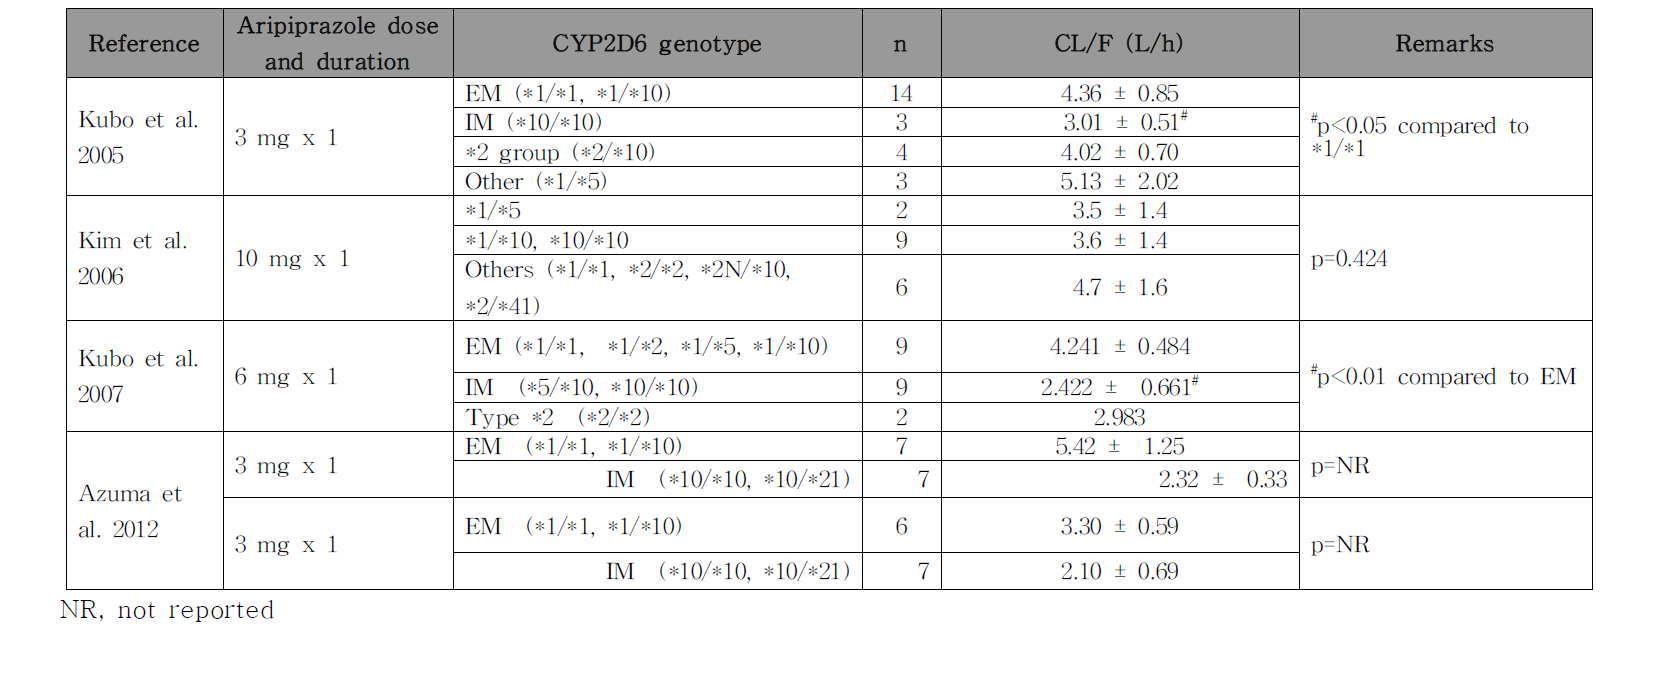 Aripiprazole의 CYP2D6 유전형별 CL/F